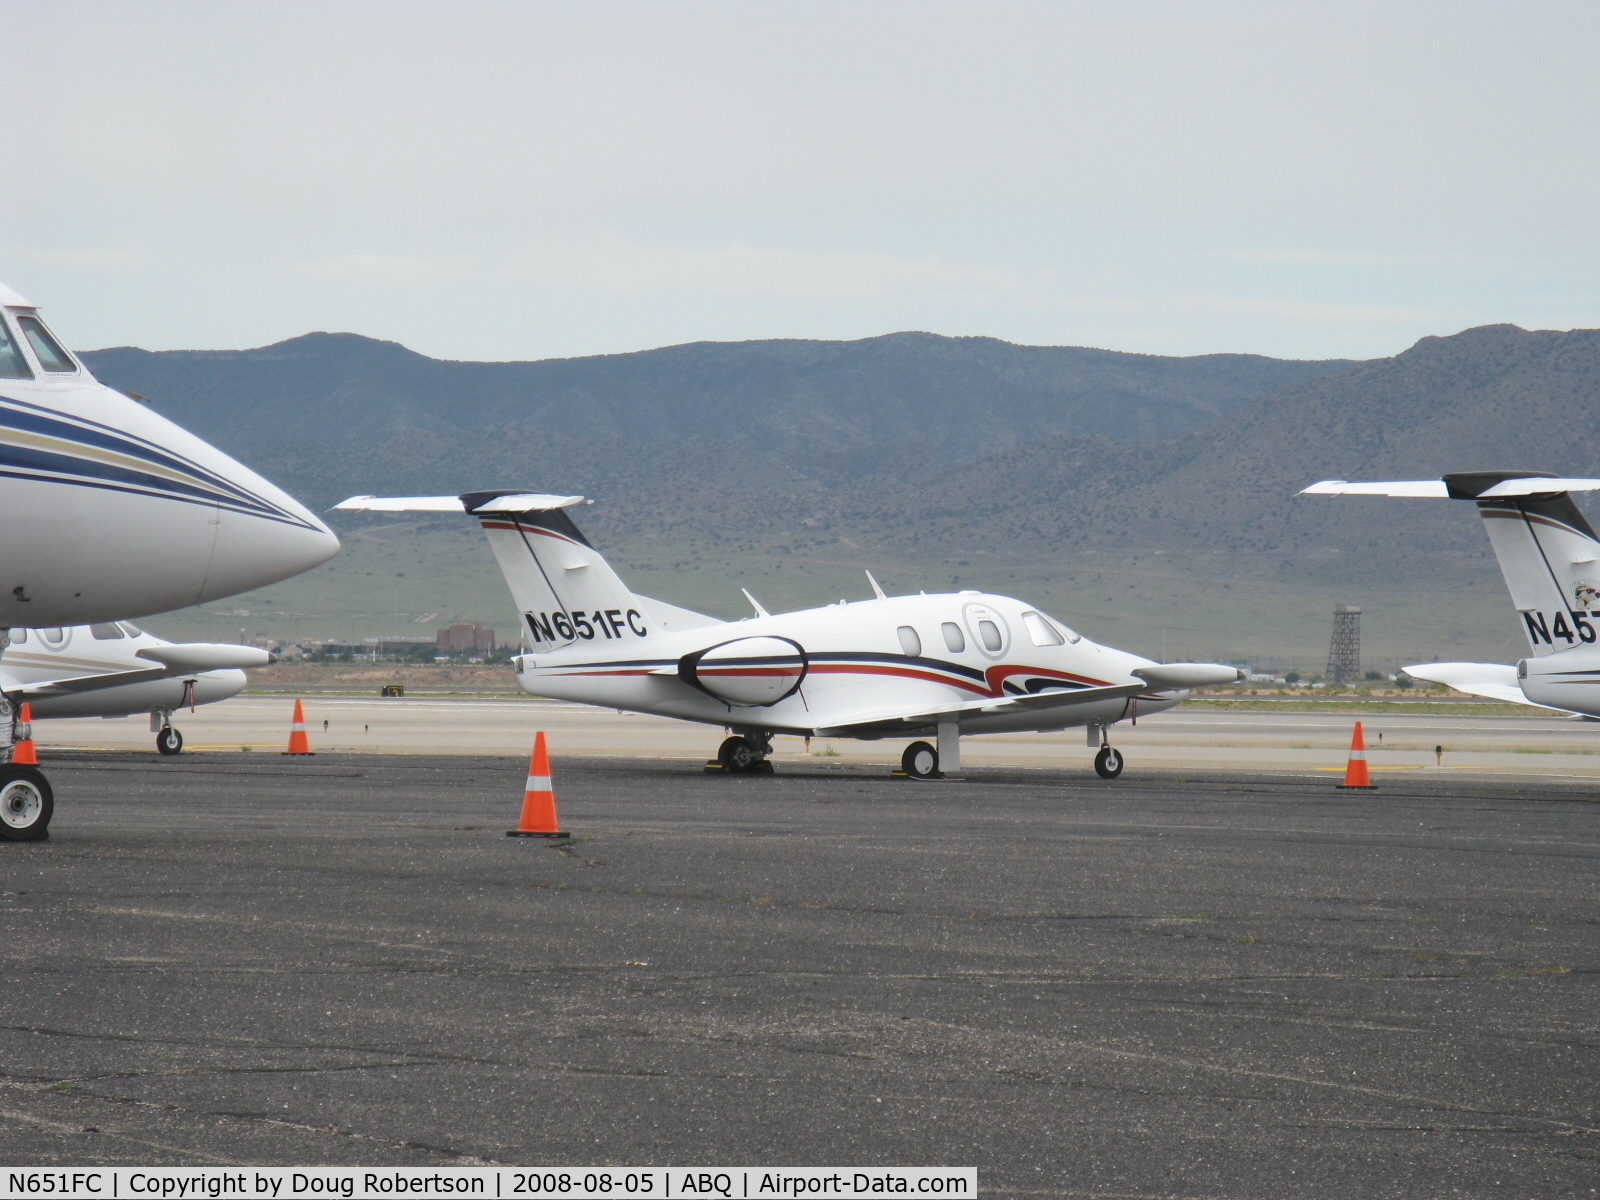 N651FC, 2007 Eclipse Aviation Corp EA500 C/N 000012, 2007 Eclipse Aviation EA500 Jet, two P&W(C)PW610F-A Turbofans 900 lb st each